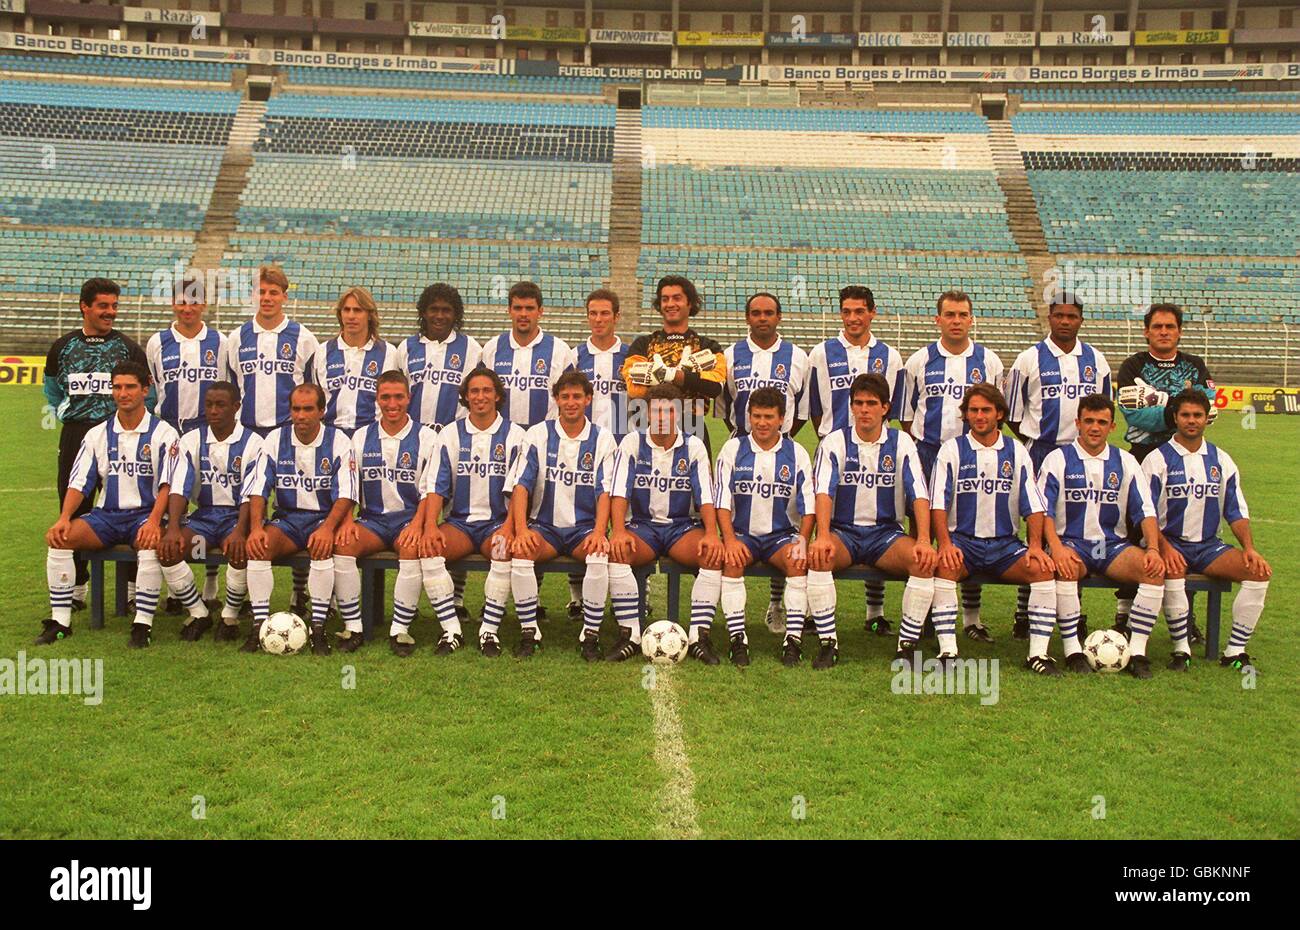 UEFA Champions League 1995/96 Stock Photo - Alamy